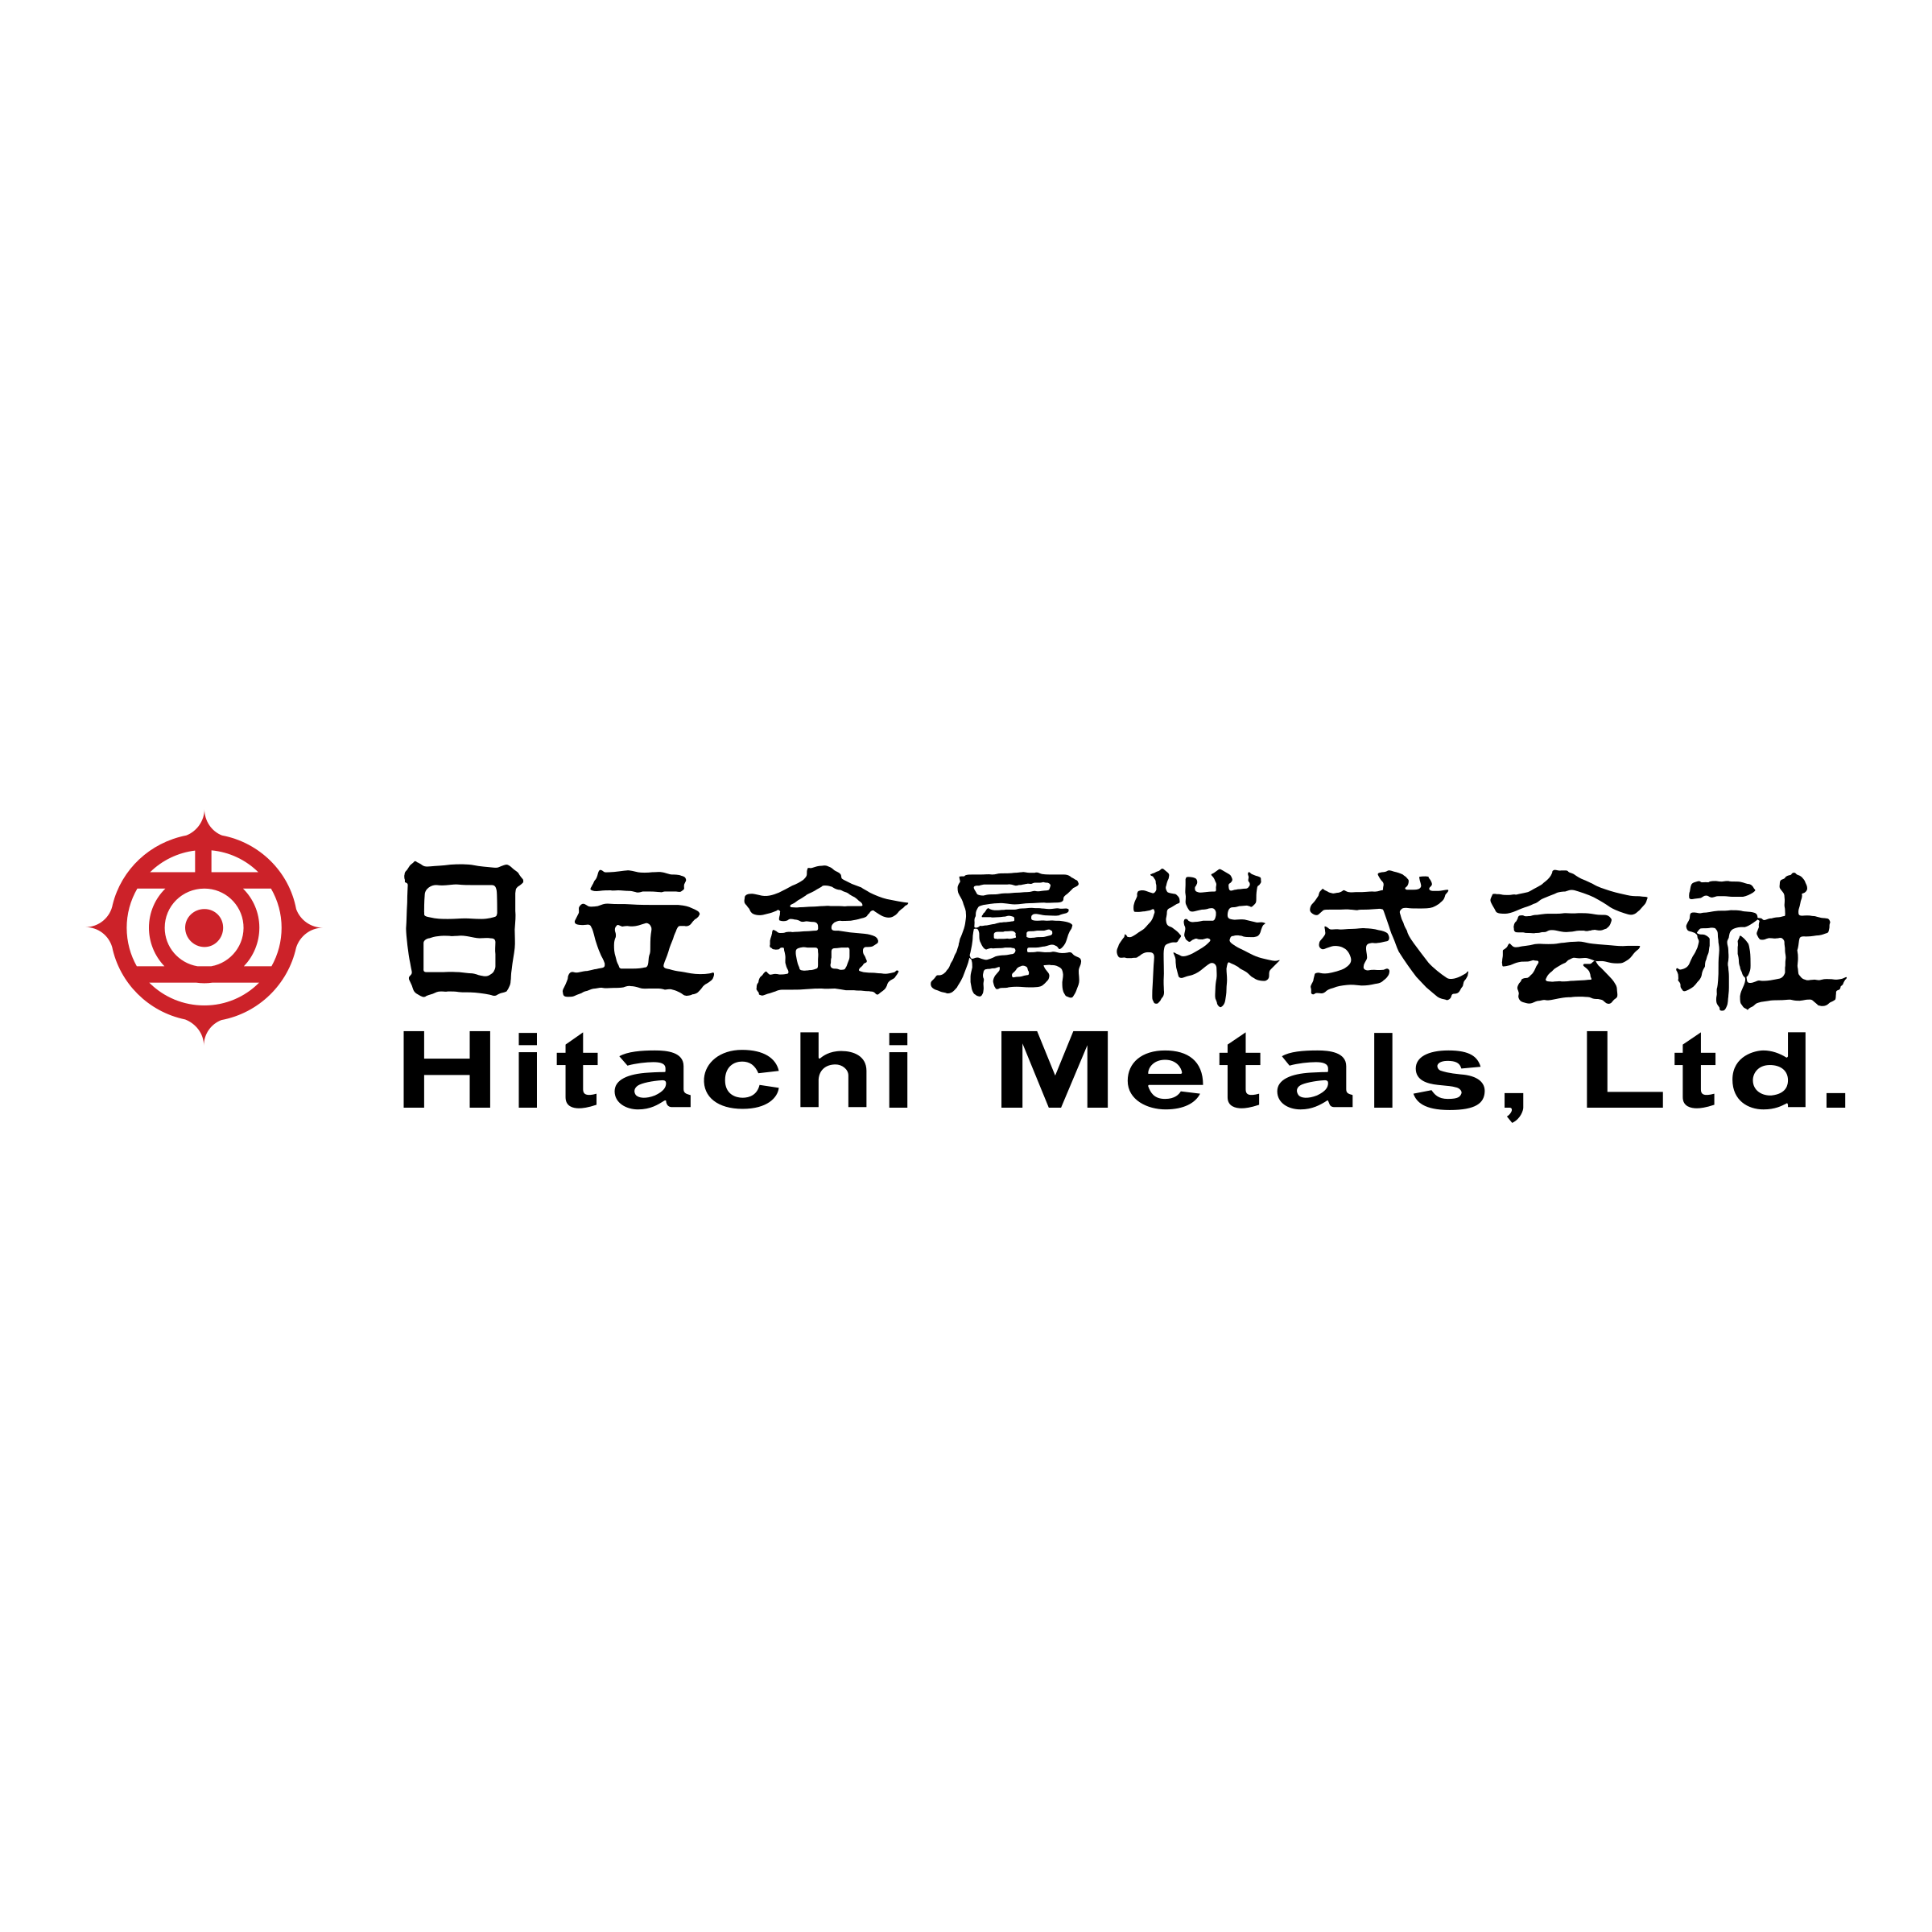 Hitachi White Logo - Hitachi Metals Logo PNG Transparent & SVG Vector - Freebie Supply